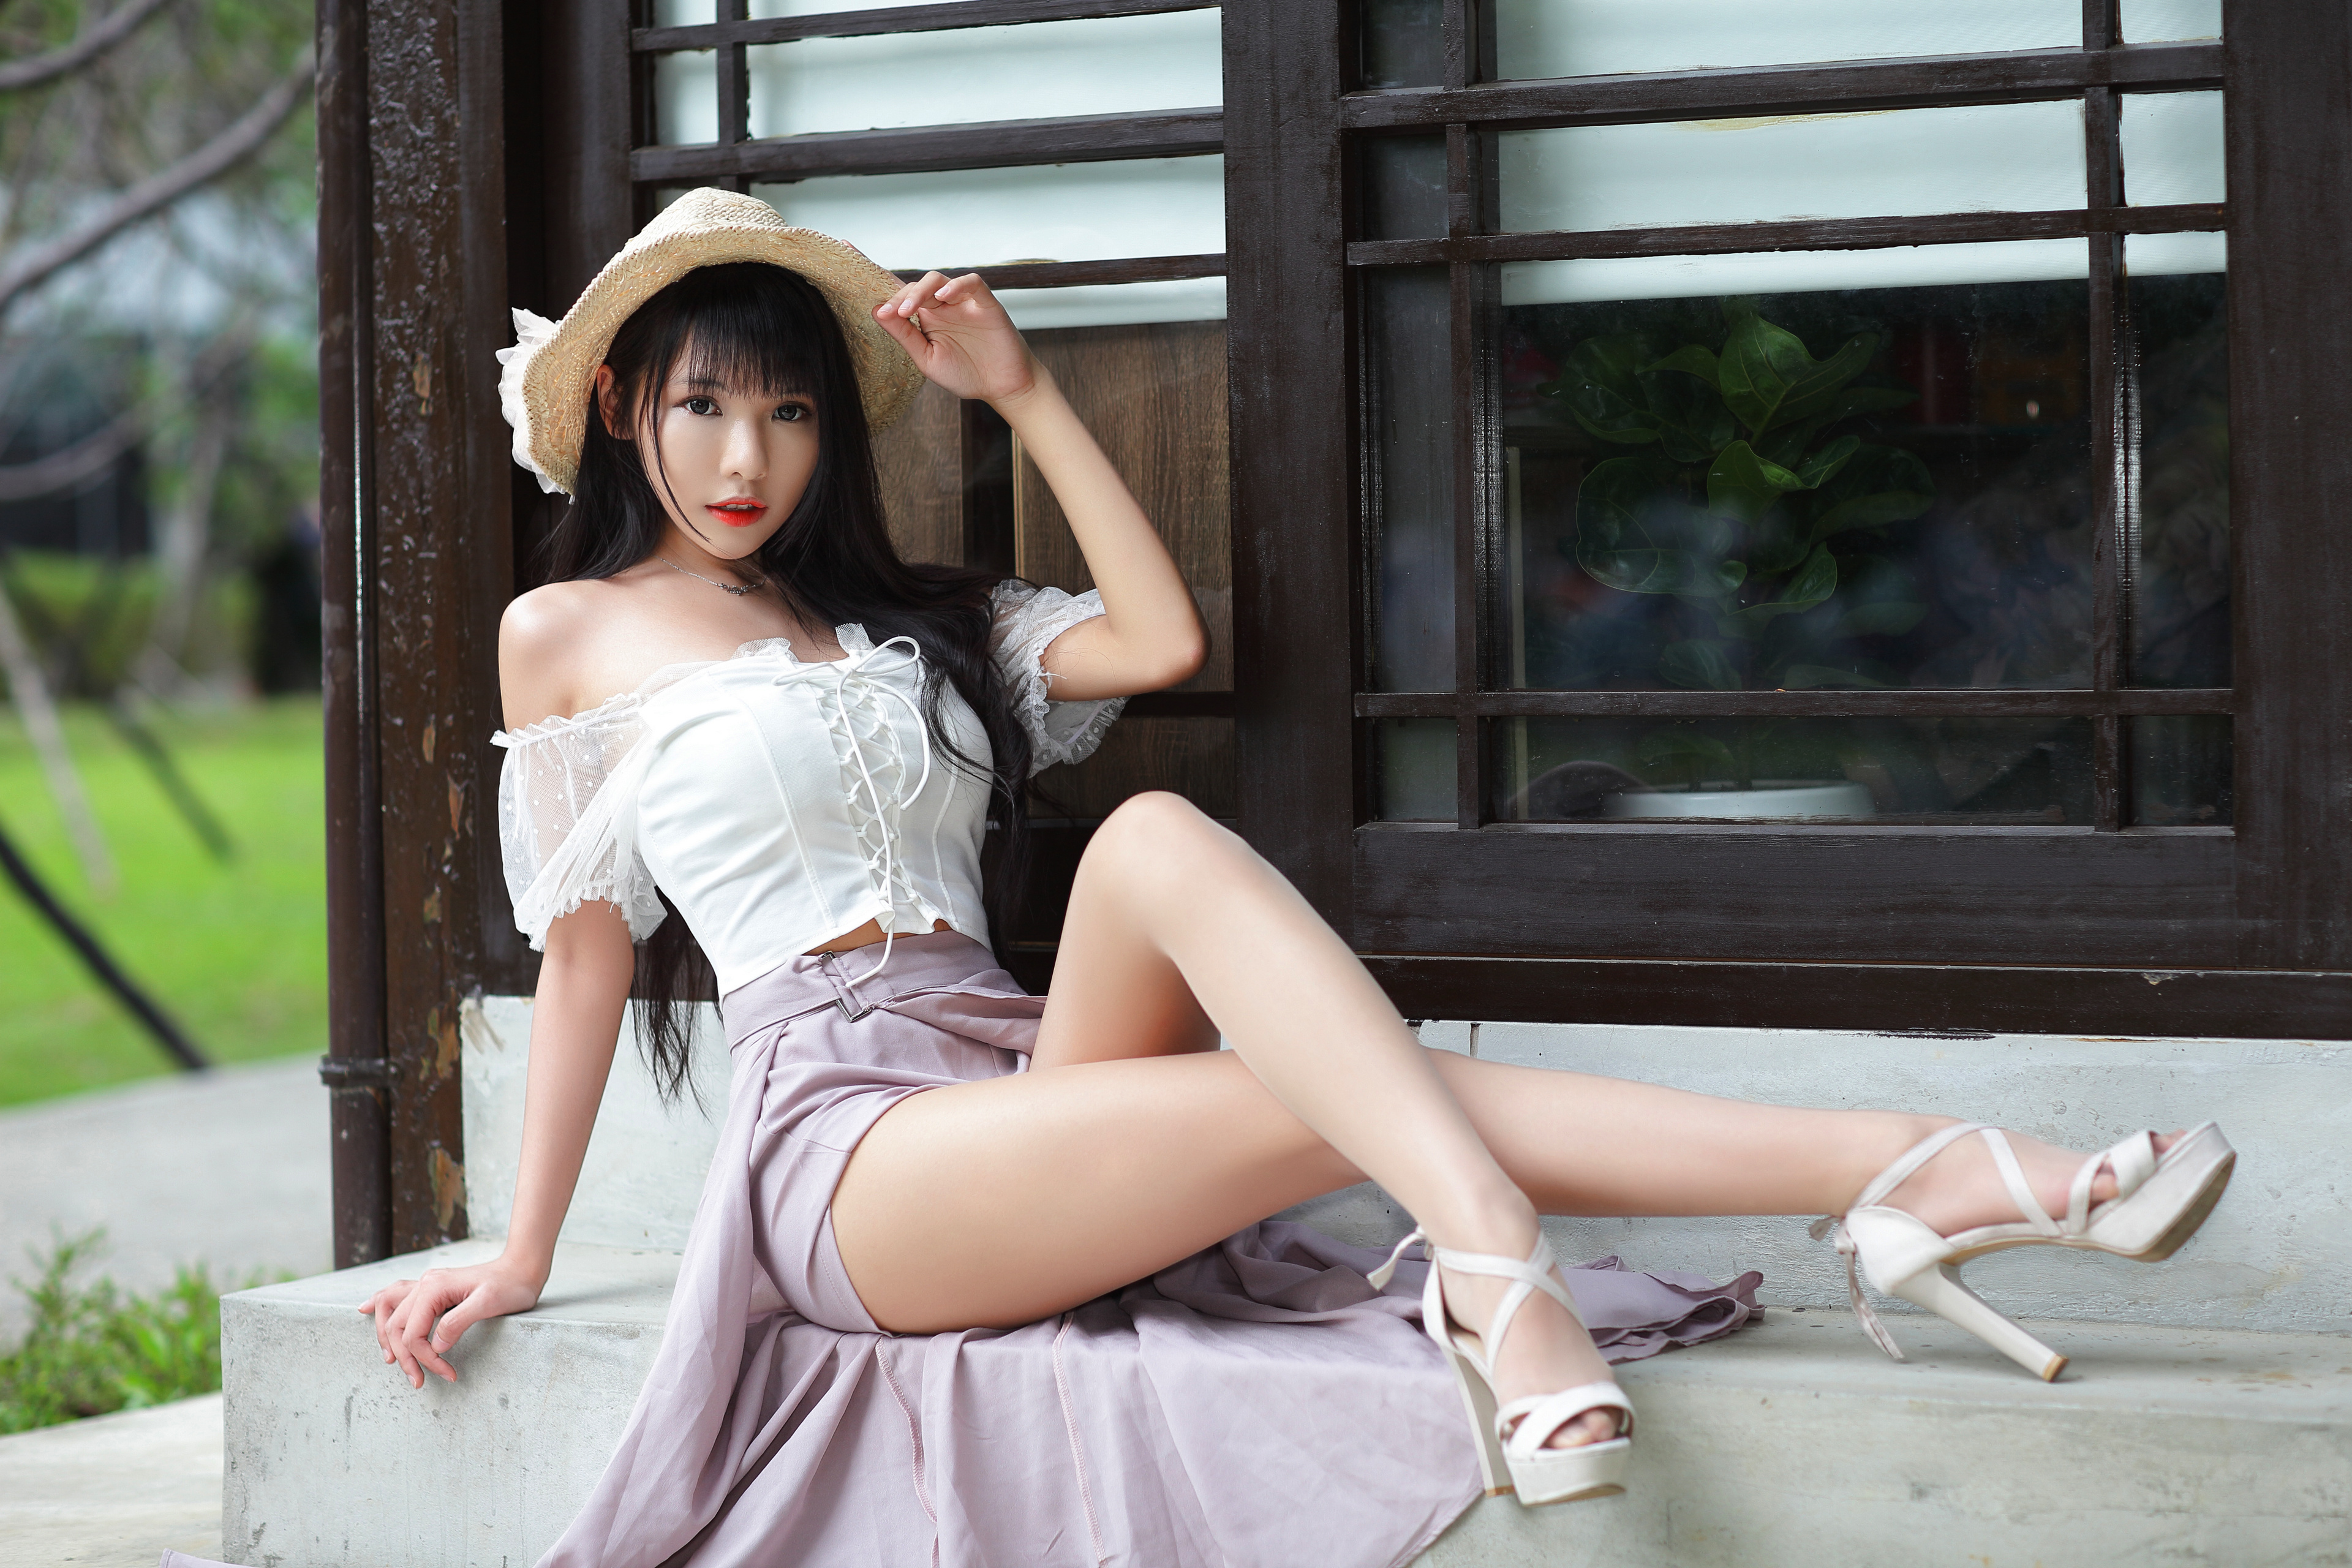 Legged asians long Cute Women